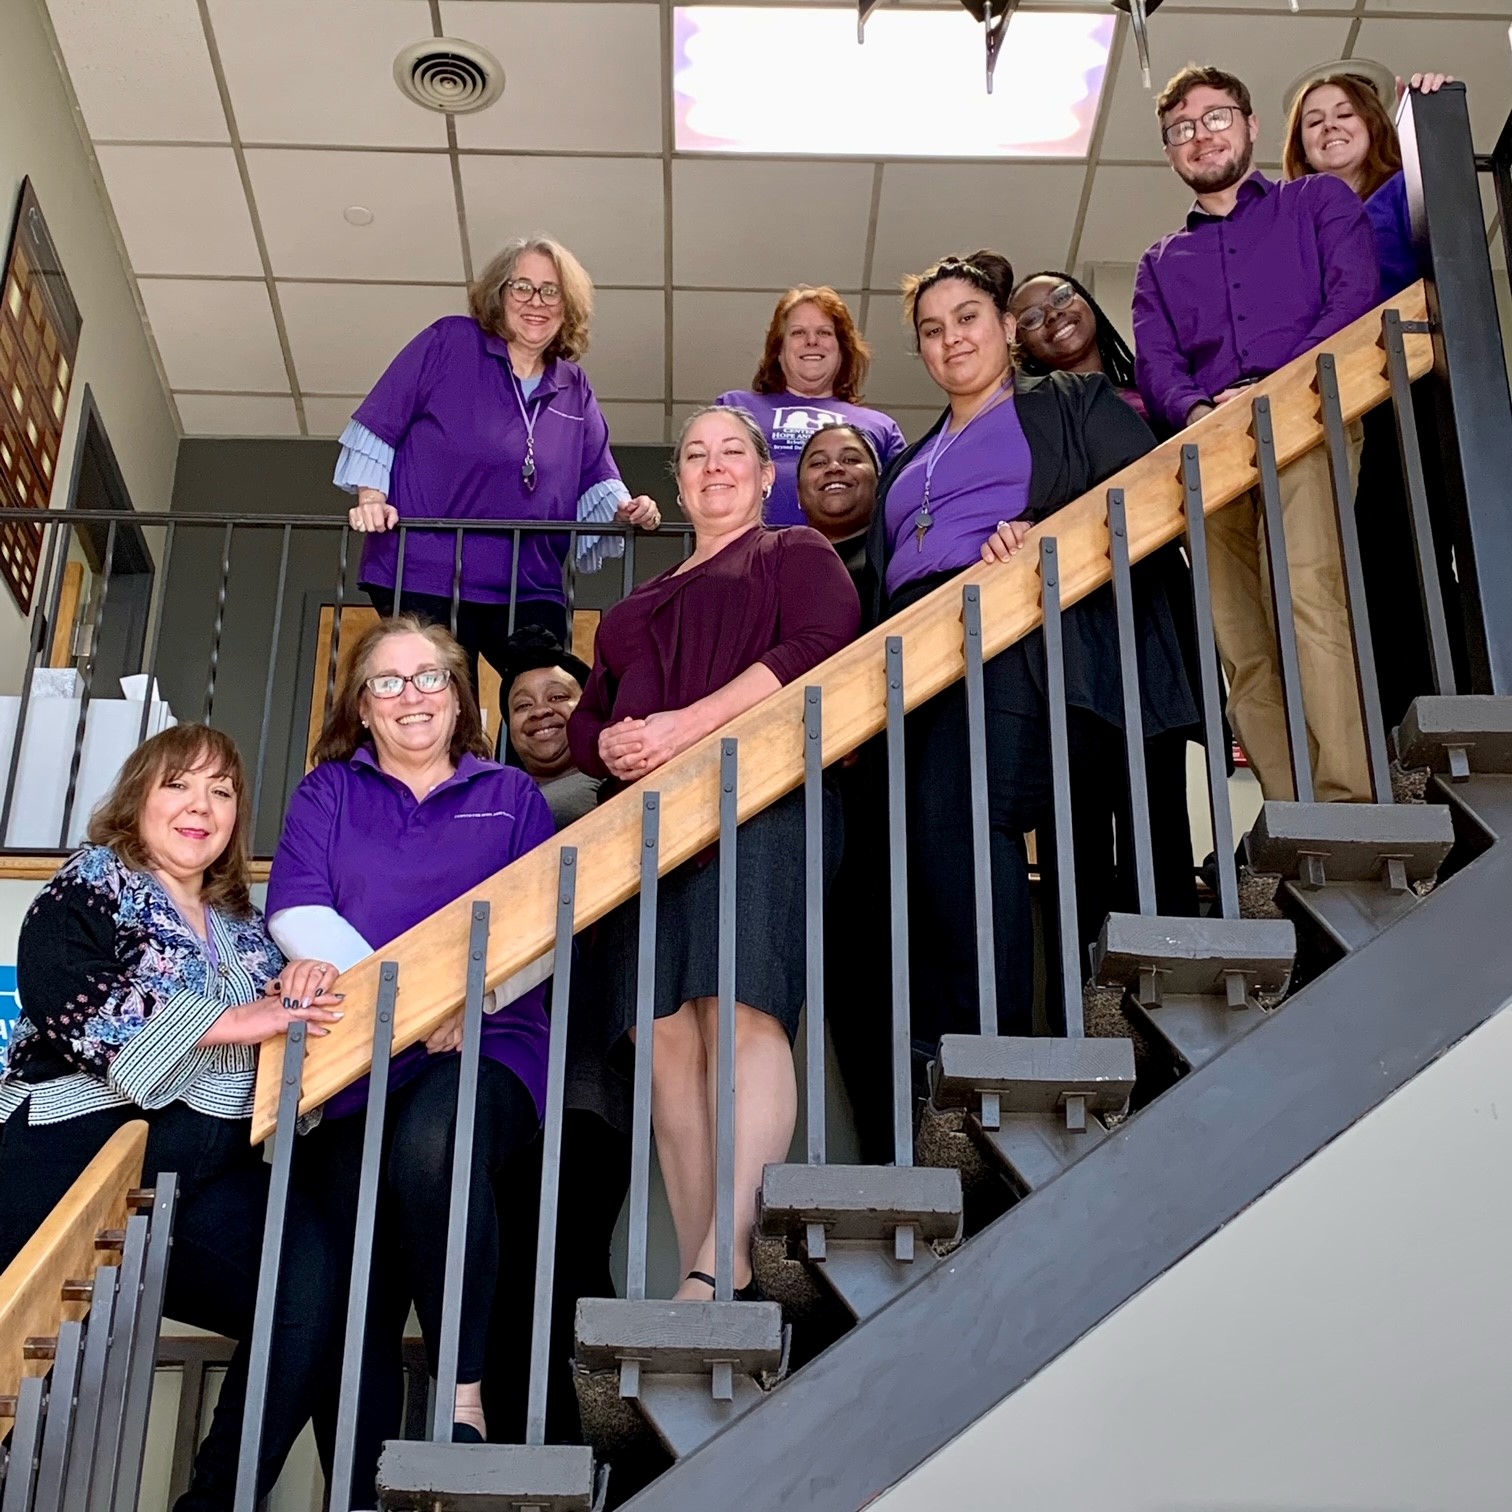 CHS staff wearing purple